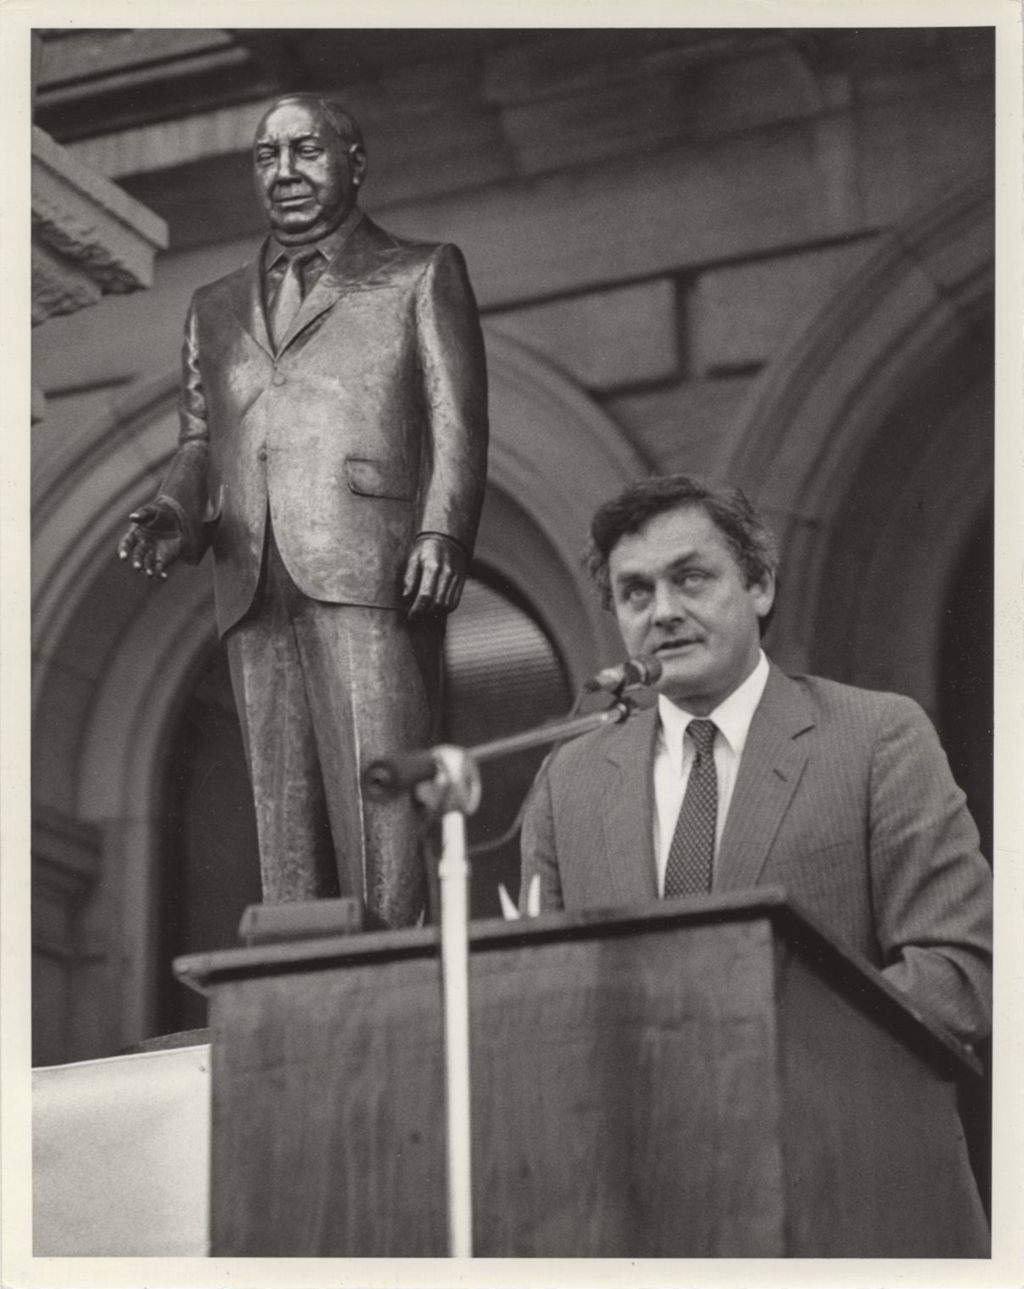 Senator Phil Rock speaking at the Richard J. Daley statue dedication